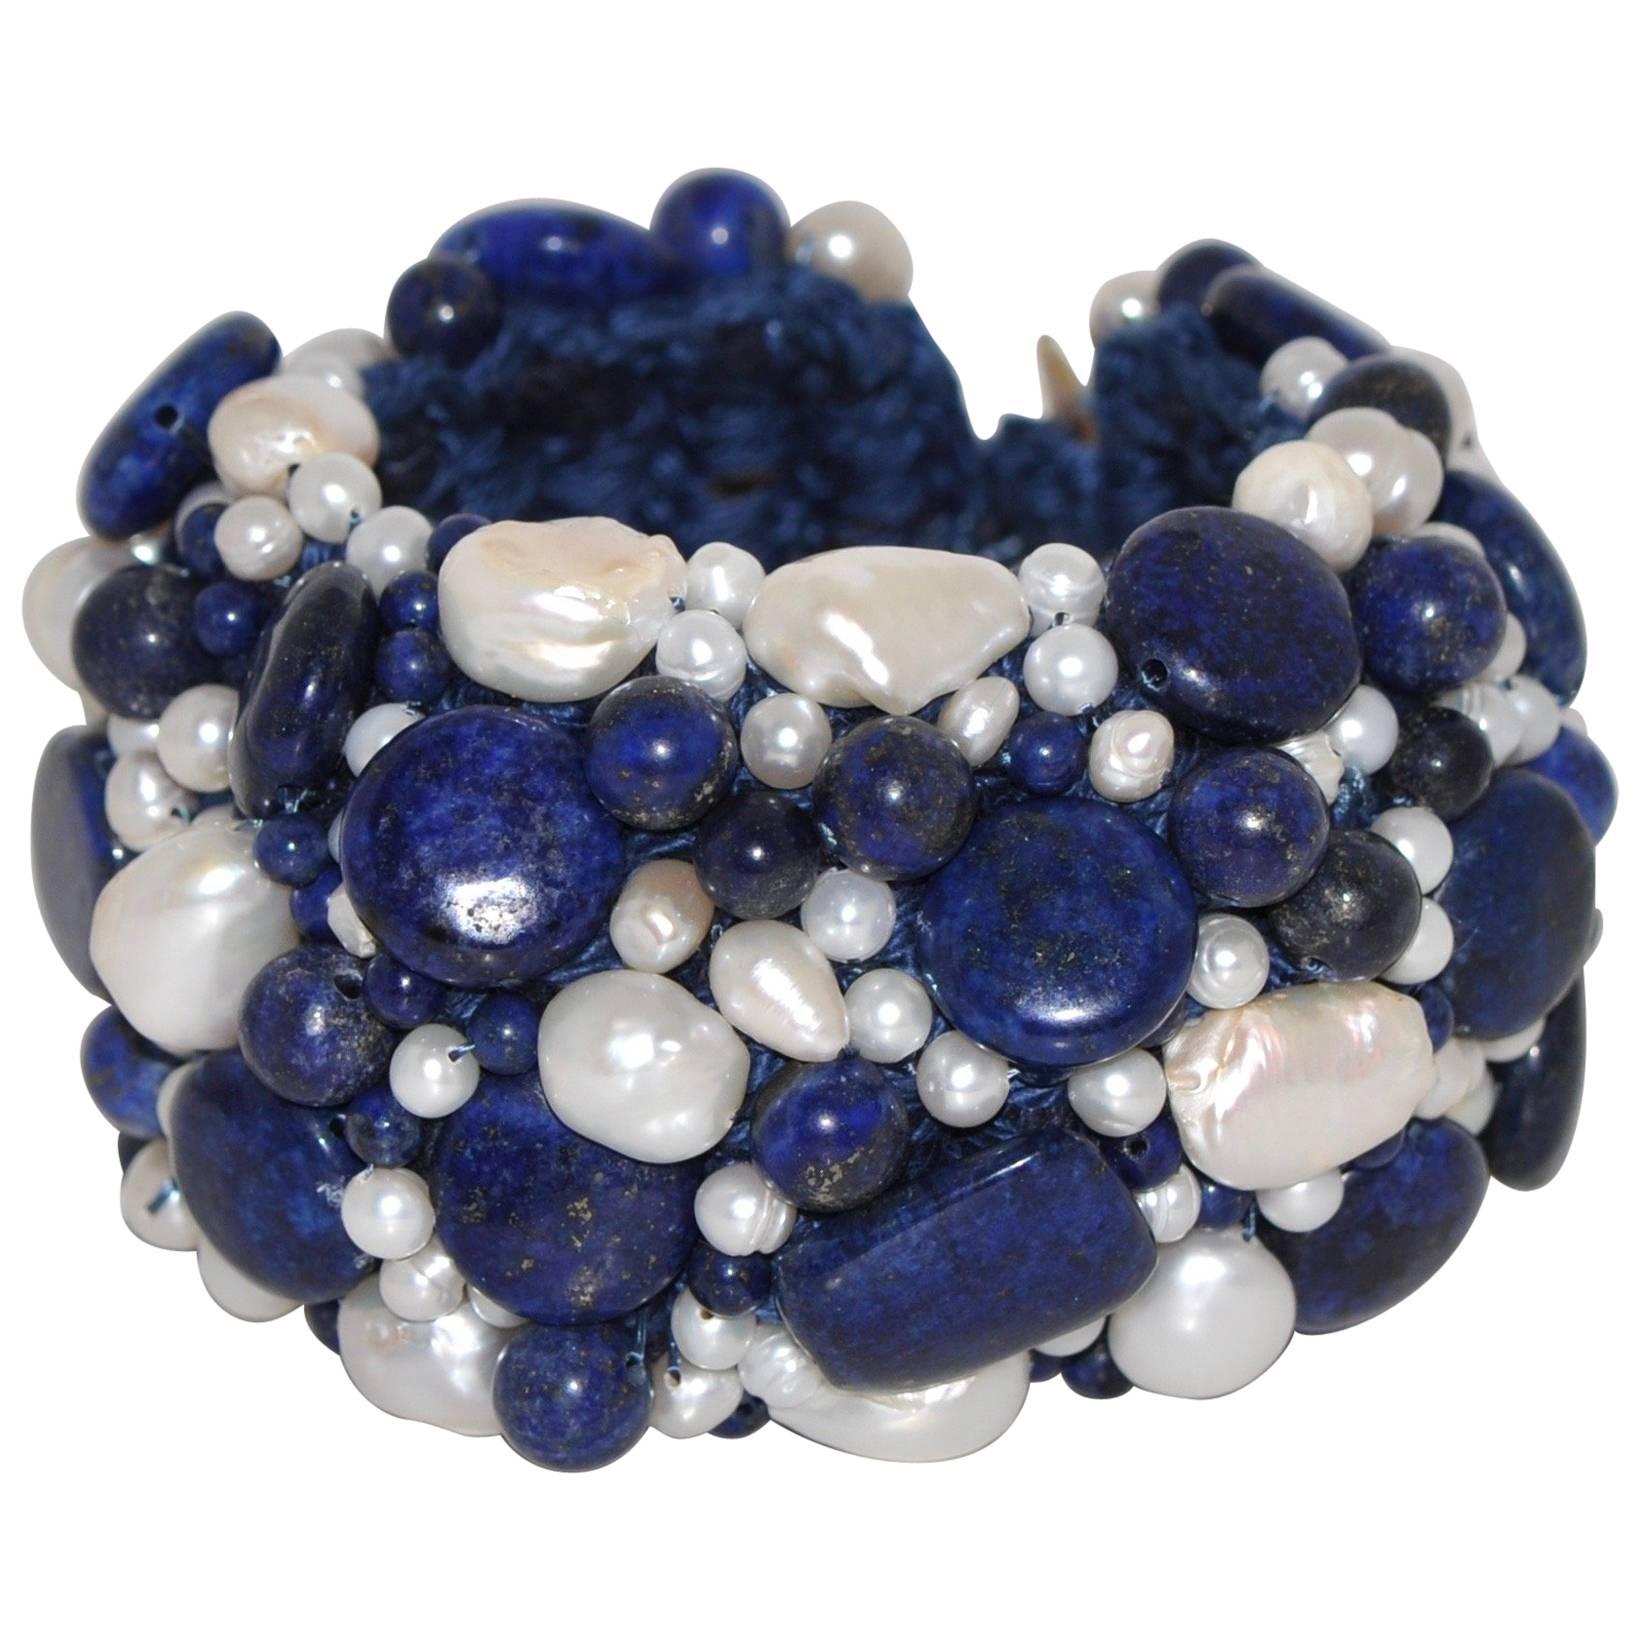 Lapis Lazuli and Freshwater Pearls Artisanal Cuff Bracelet